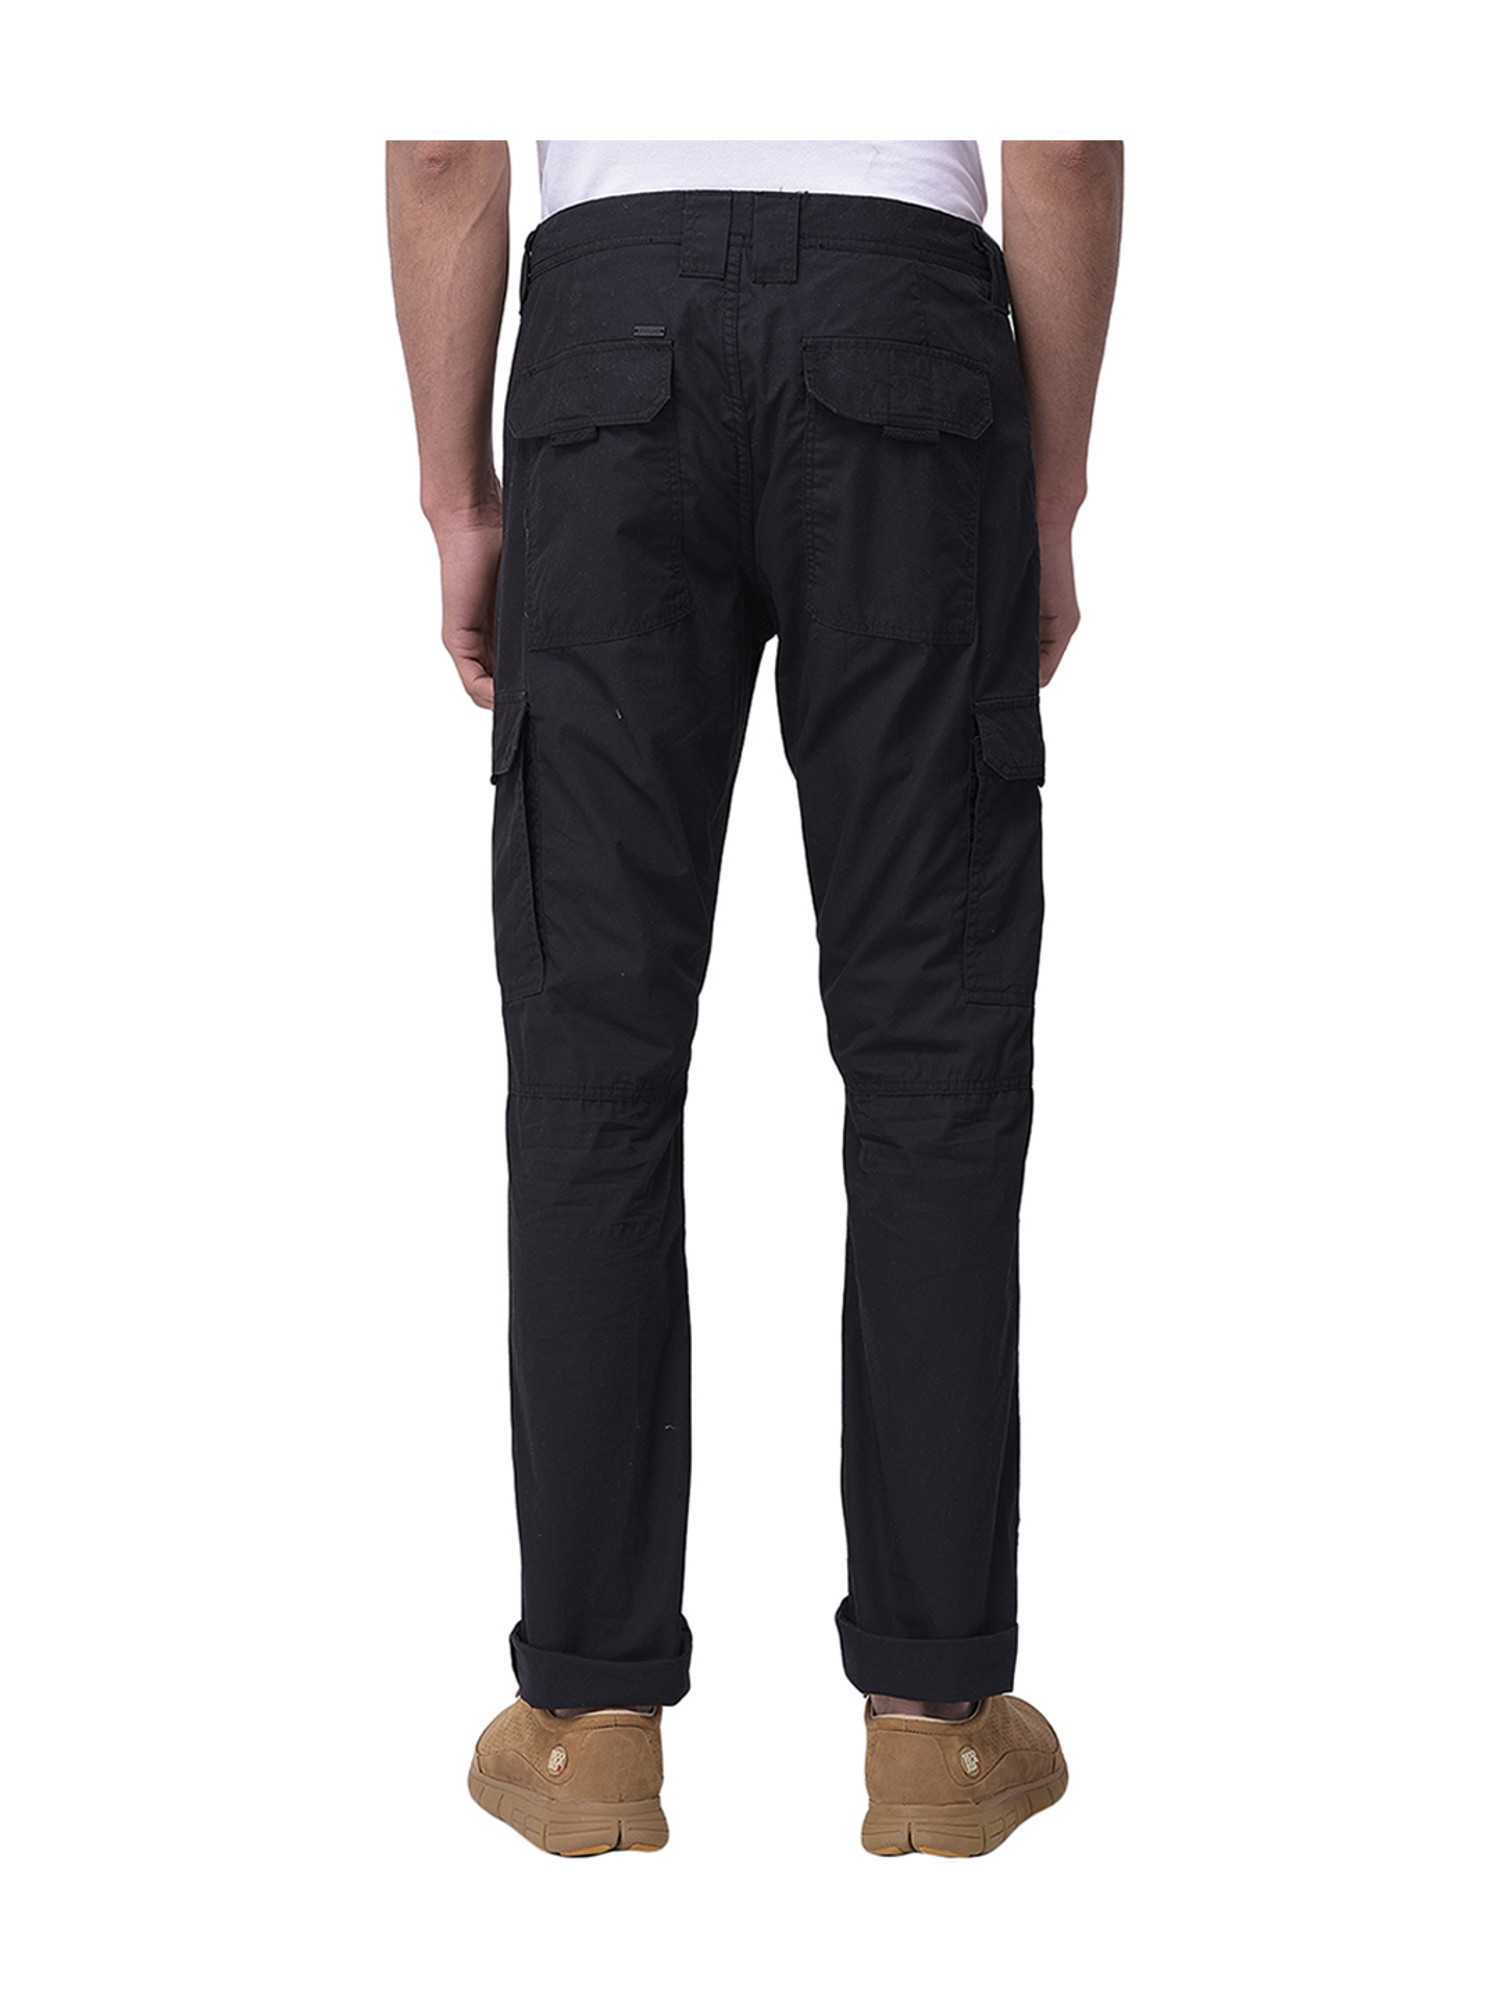 Black Cargo Pants for Men Best Black Cargo Pants for Men in India Combine  Style  Comfort  The Economic Times